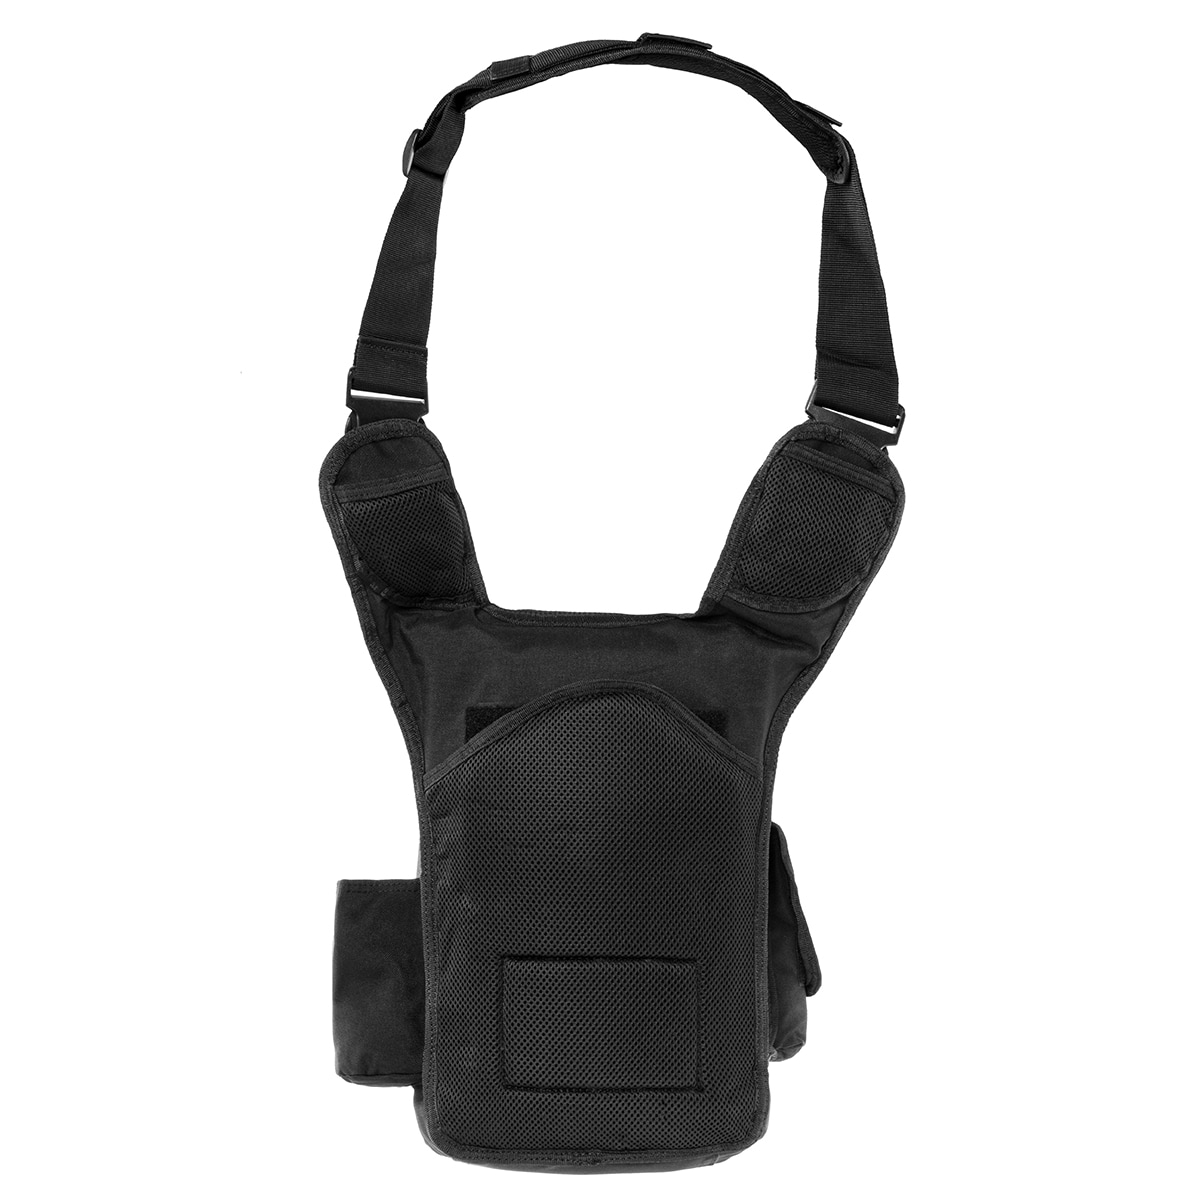 Torba Voodoo Tactical Padded Concealment Bag 5 l - Black